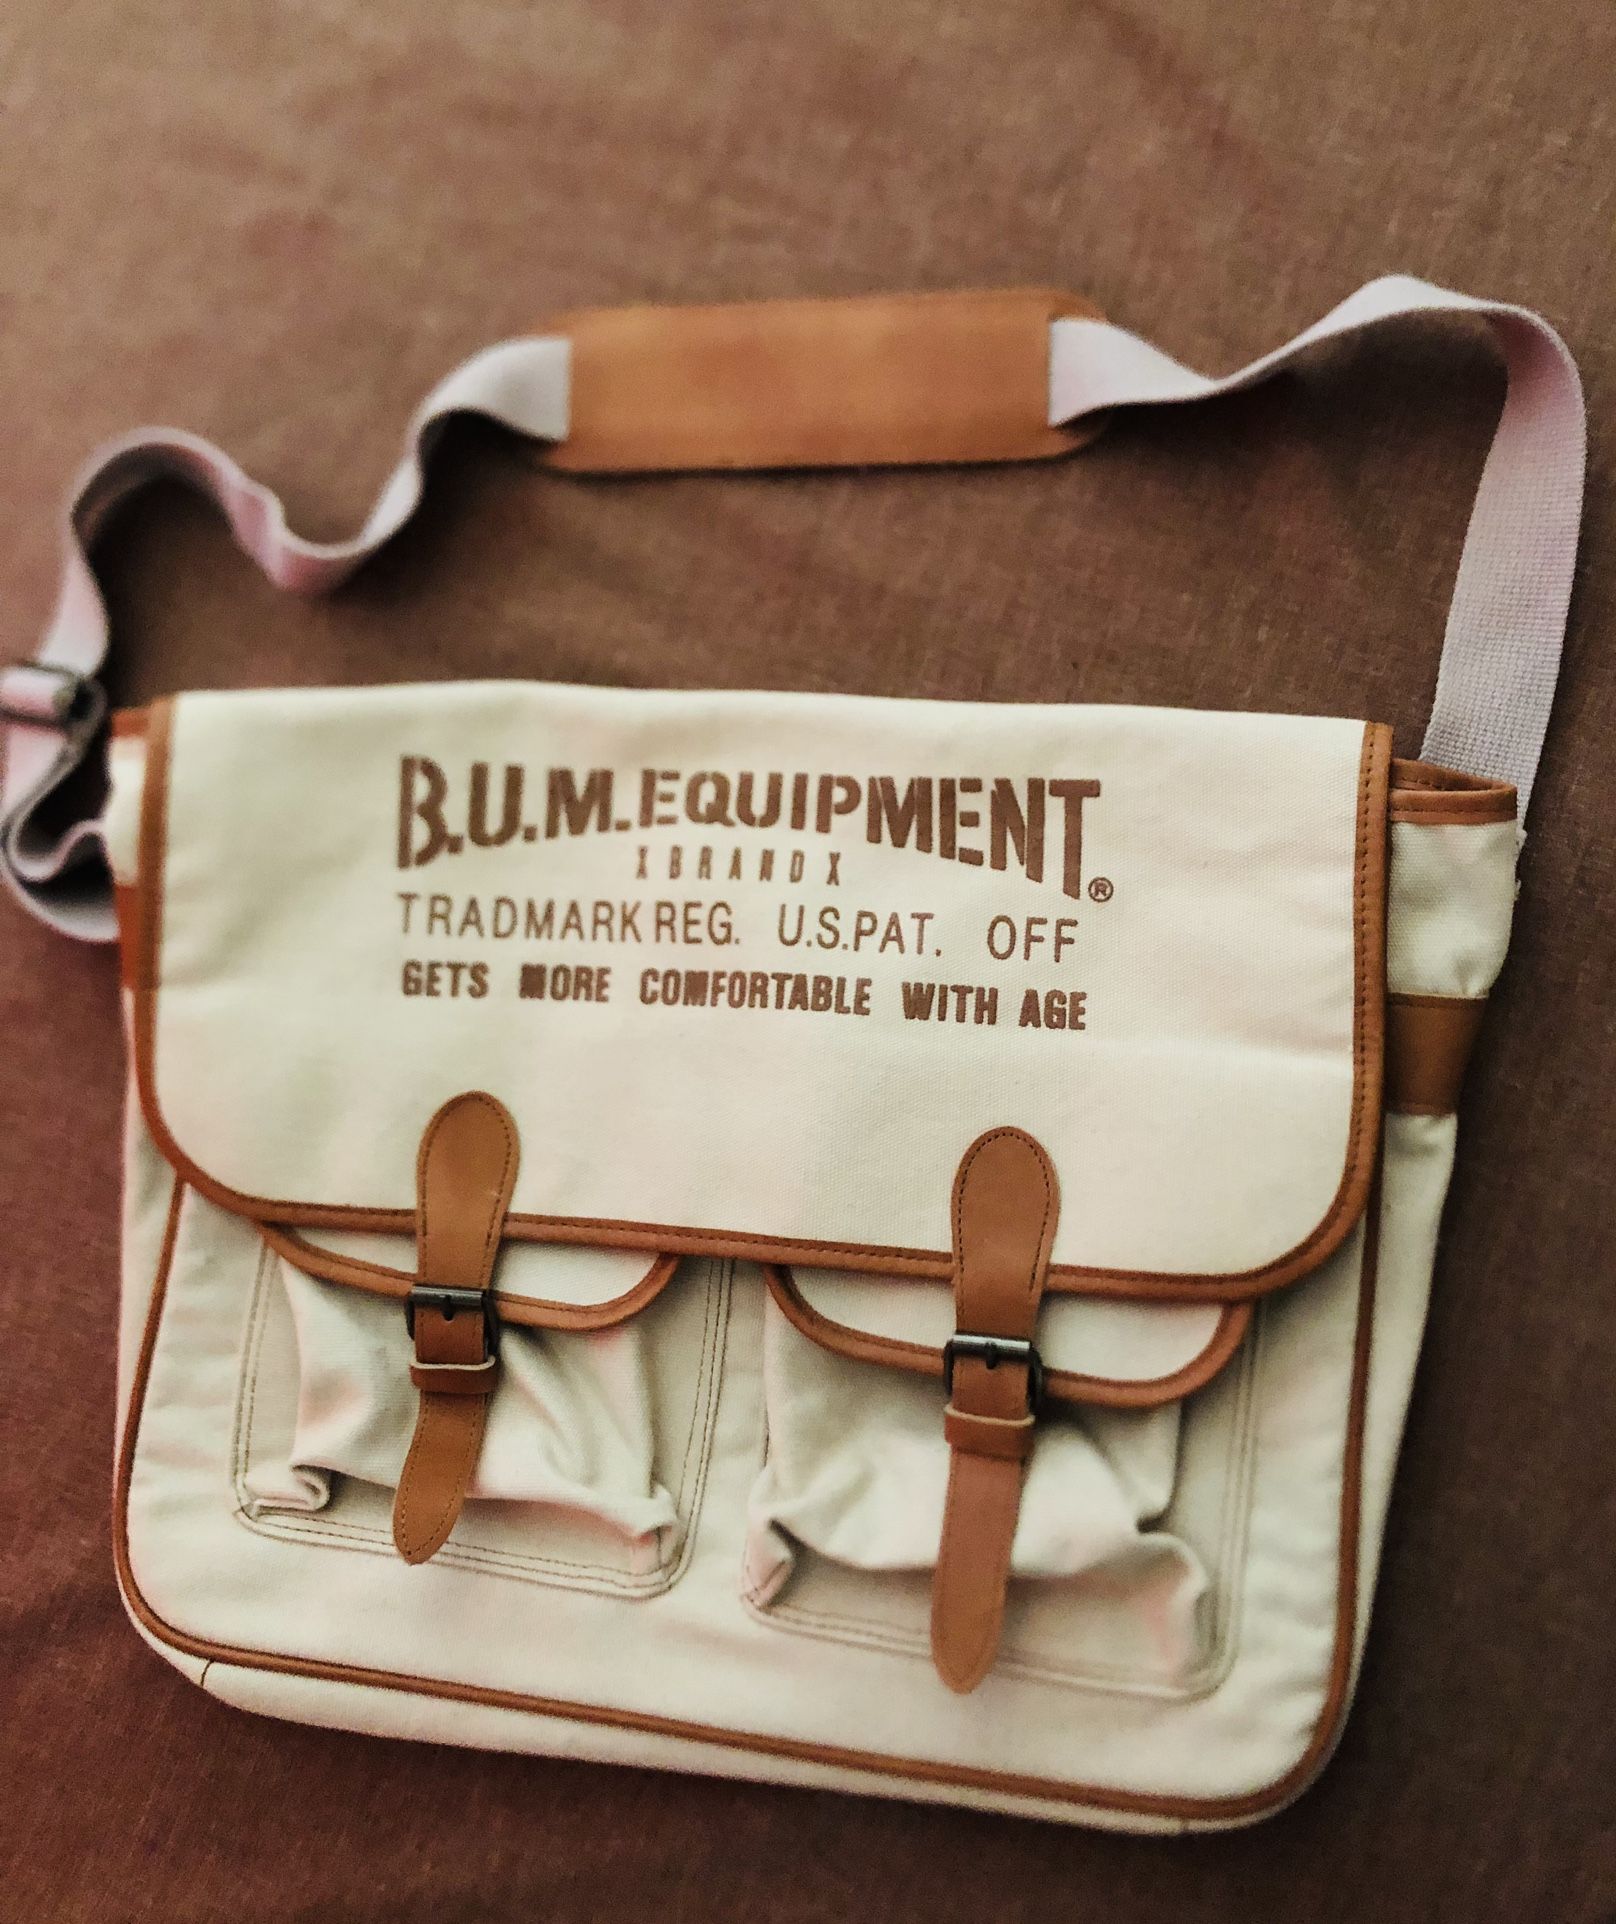 Brand New B.U.M. EQUIPMENT Leather Trimed Canvas Bag - 16” X 5” X13”